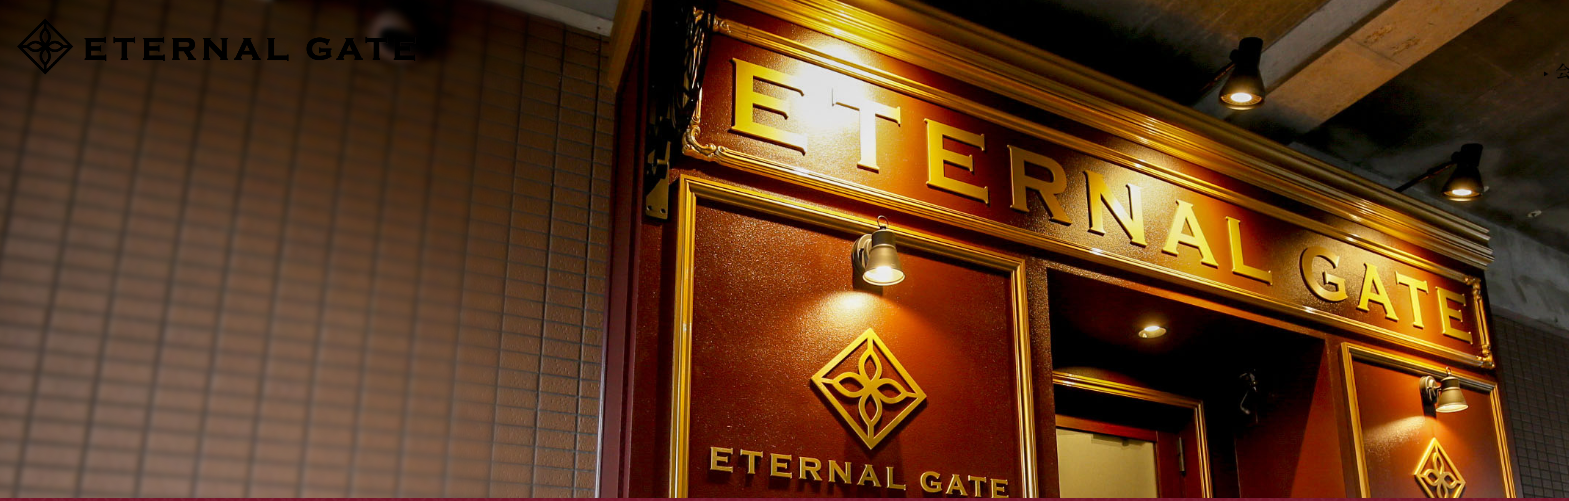 Eternal Gate 【エターナルゲート】 各務原店